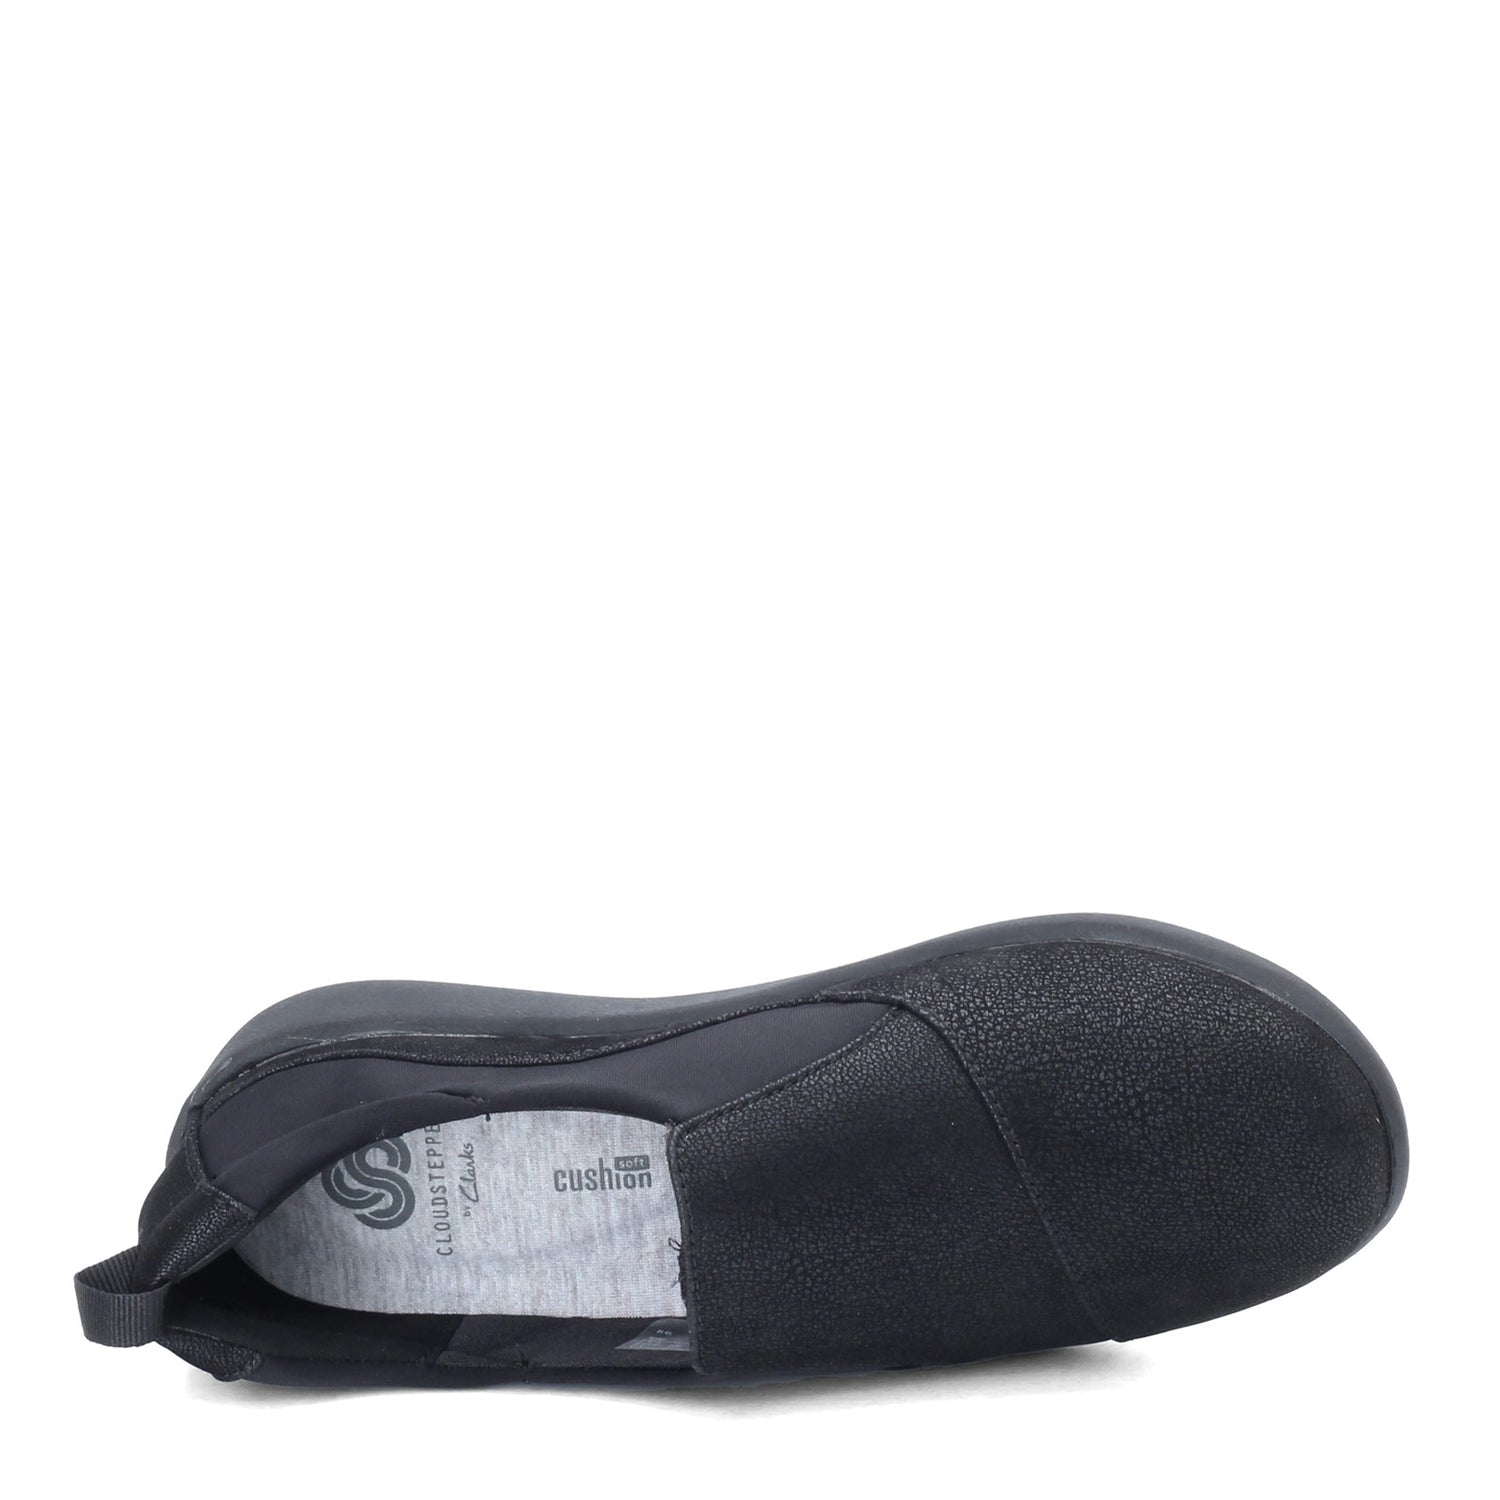 Peltz Shoes  Women's Clarks Sillian Paz Slip-On BLACK 26120931